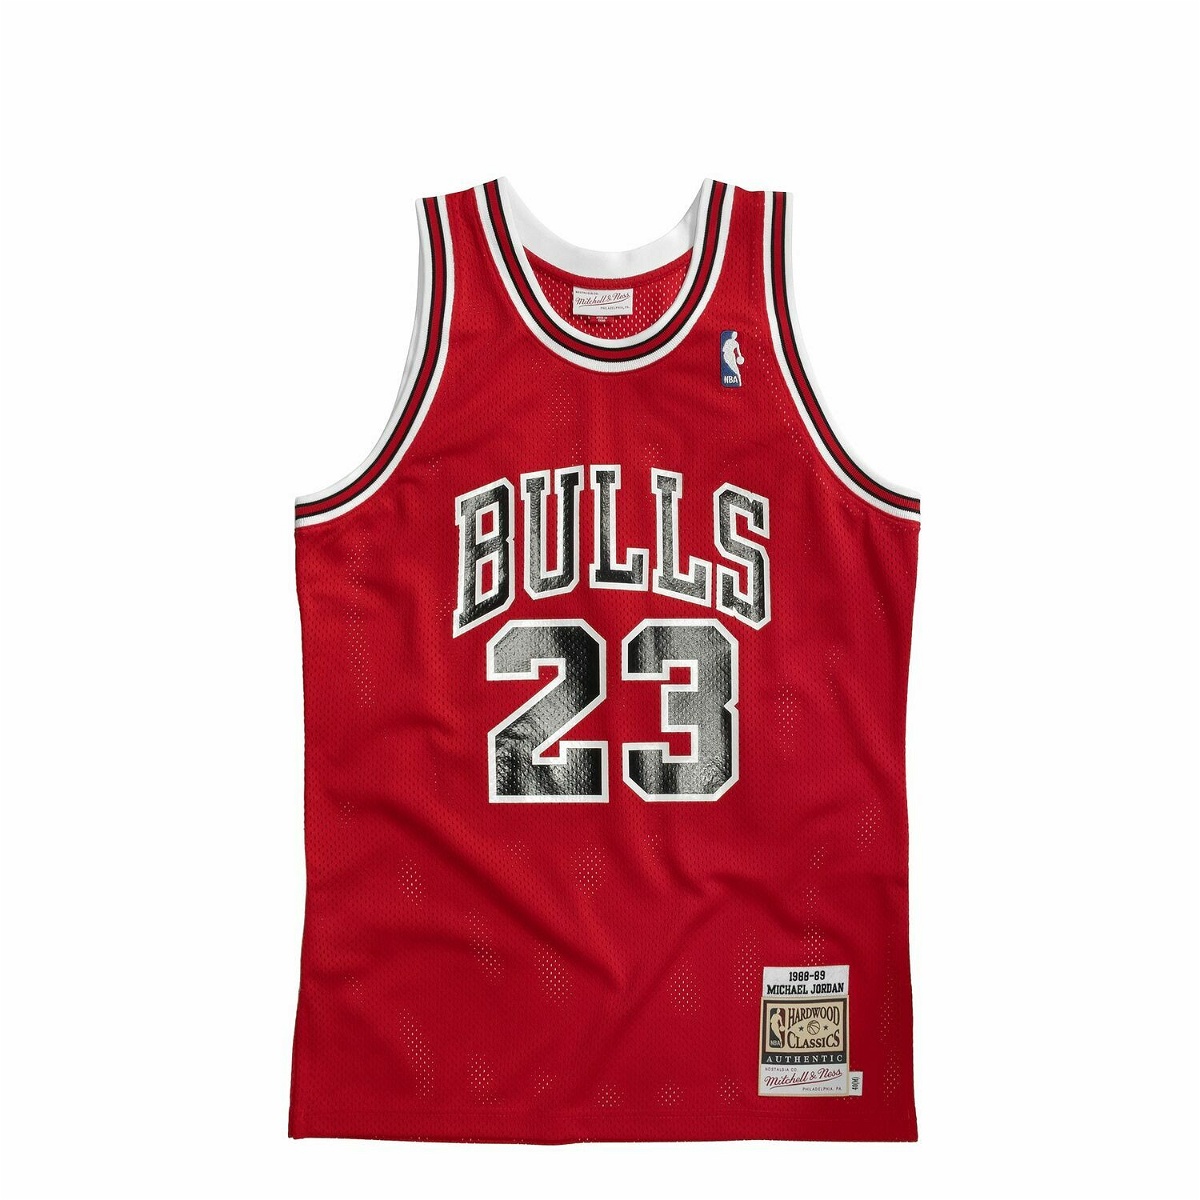 Mitchell & Ness Nba Authentic Jersey Chicago Bulls 1988 89 Michael Jordan #23 Red - Mens - Jerseys